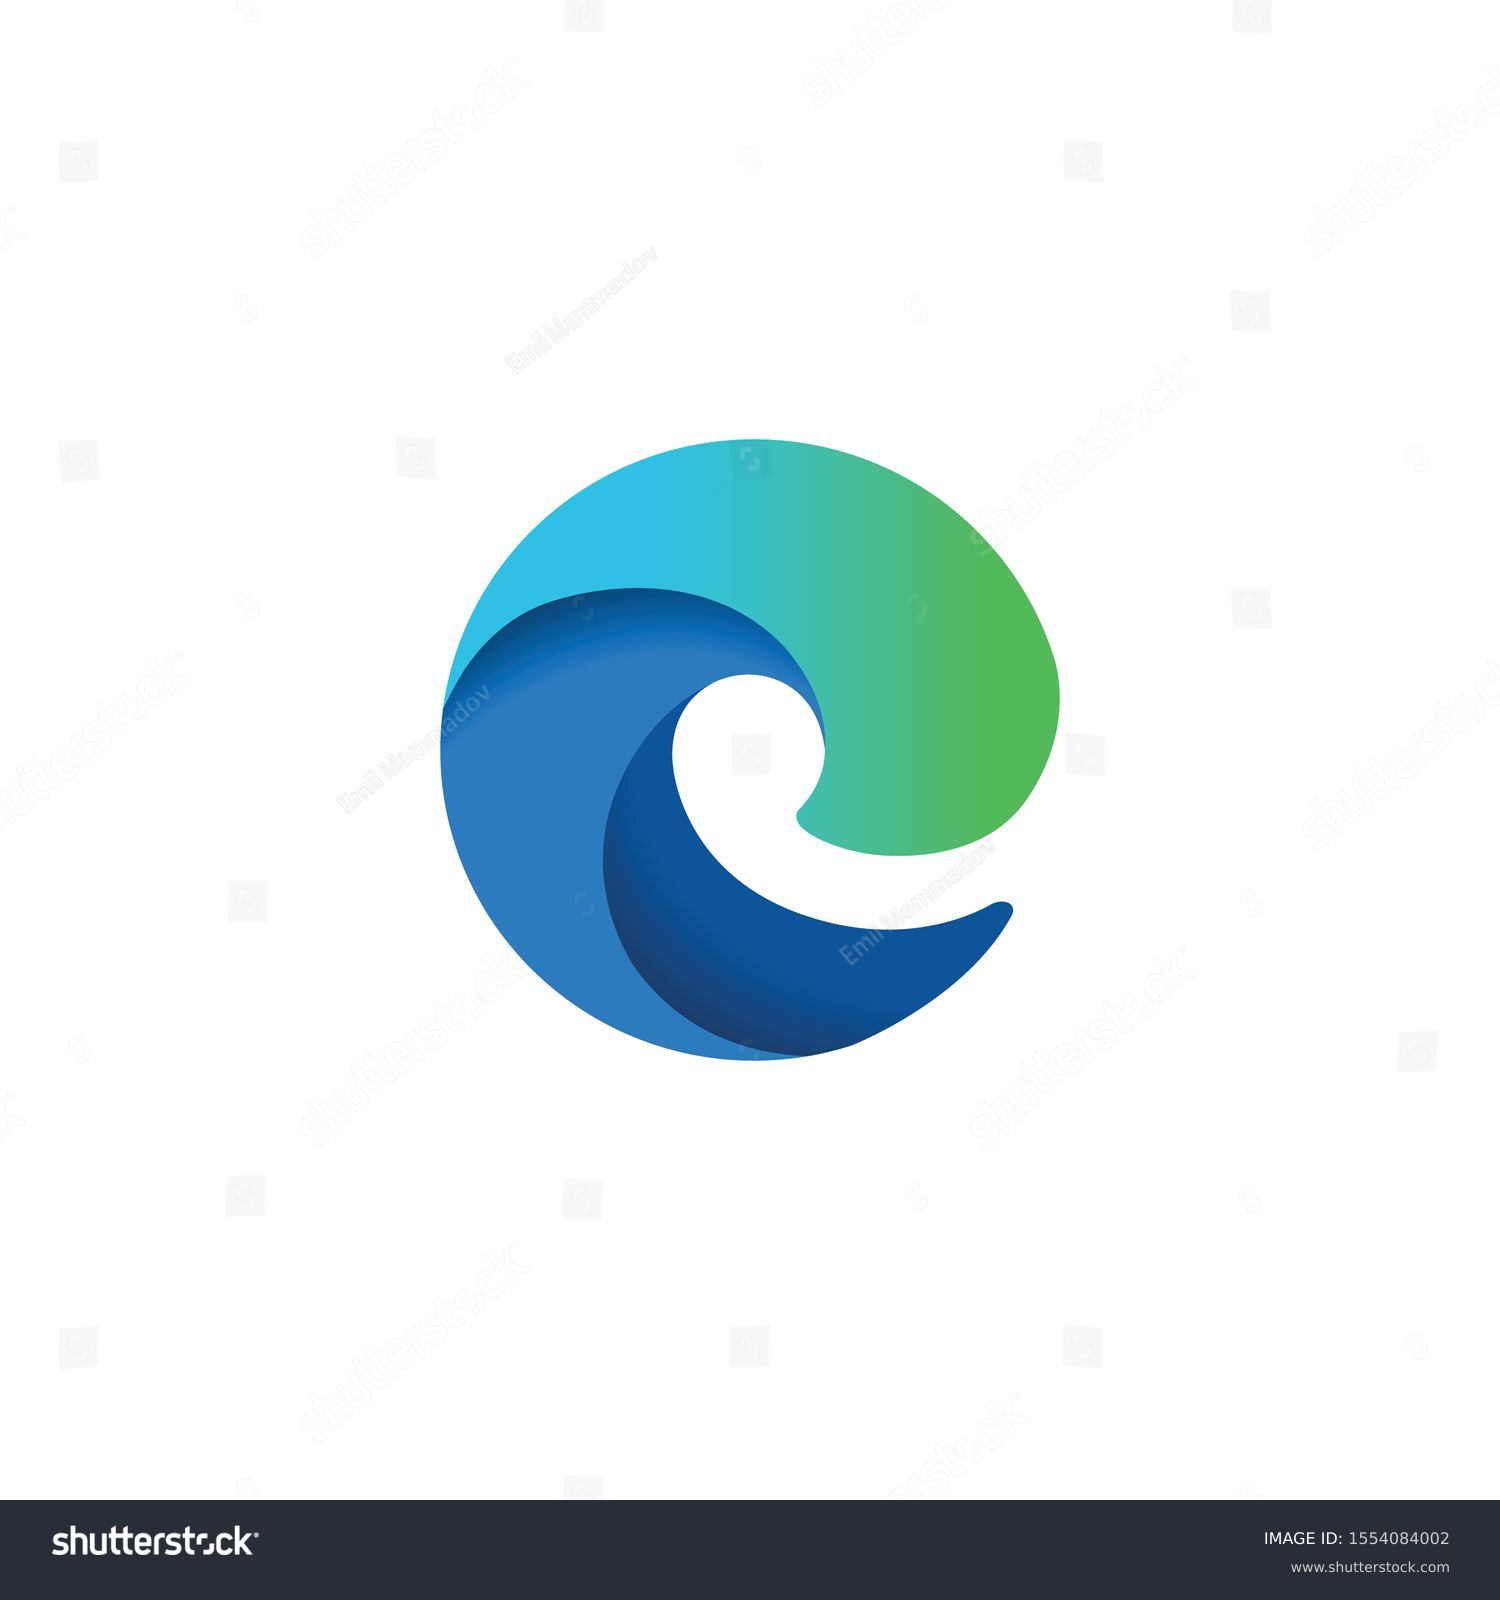 SVG of Microsoft edge chromium browser brand new logo 2019 isolated on white background. Microsoft edge icon. svg